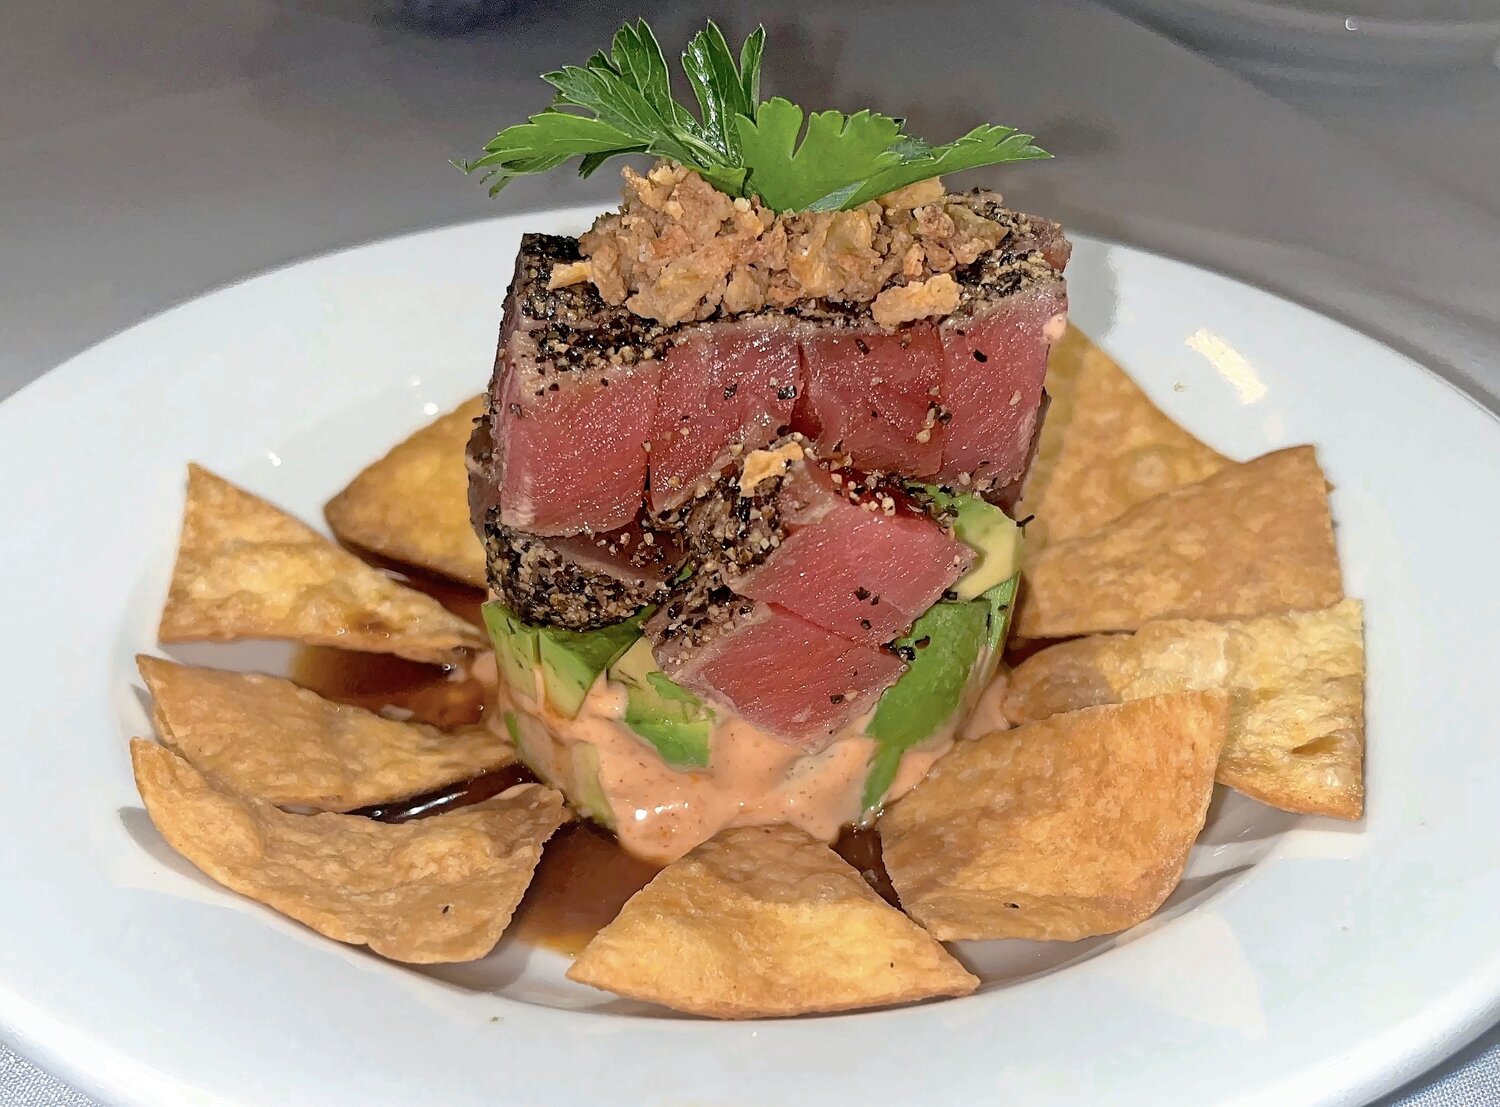 Blackened Tuna Bites, an interesting take on a familiar appetizer.